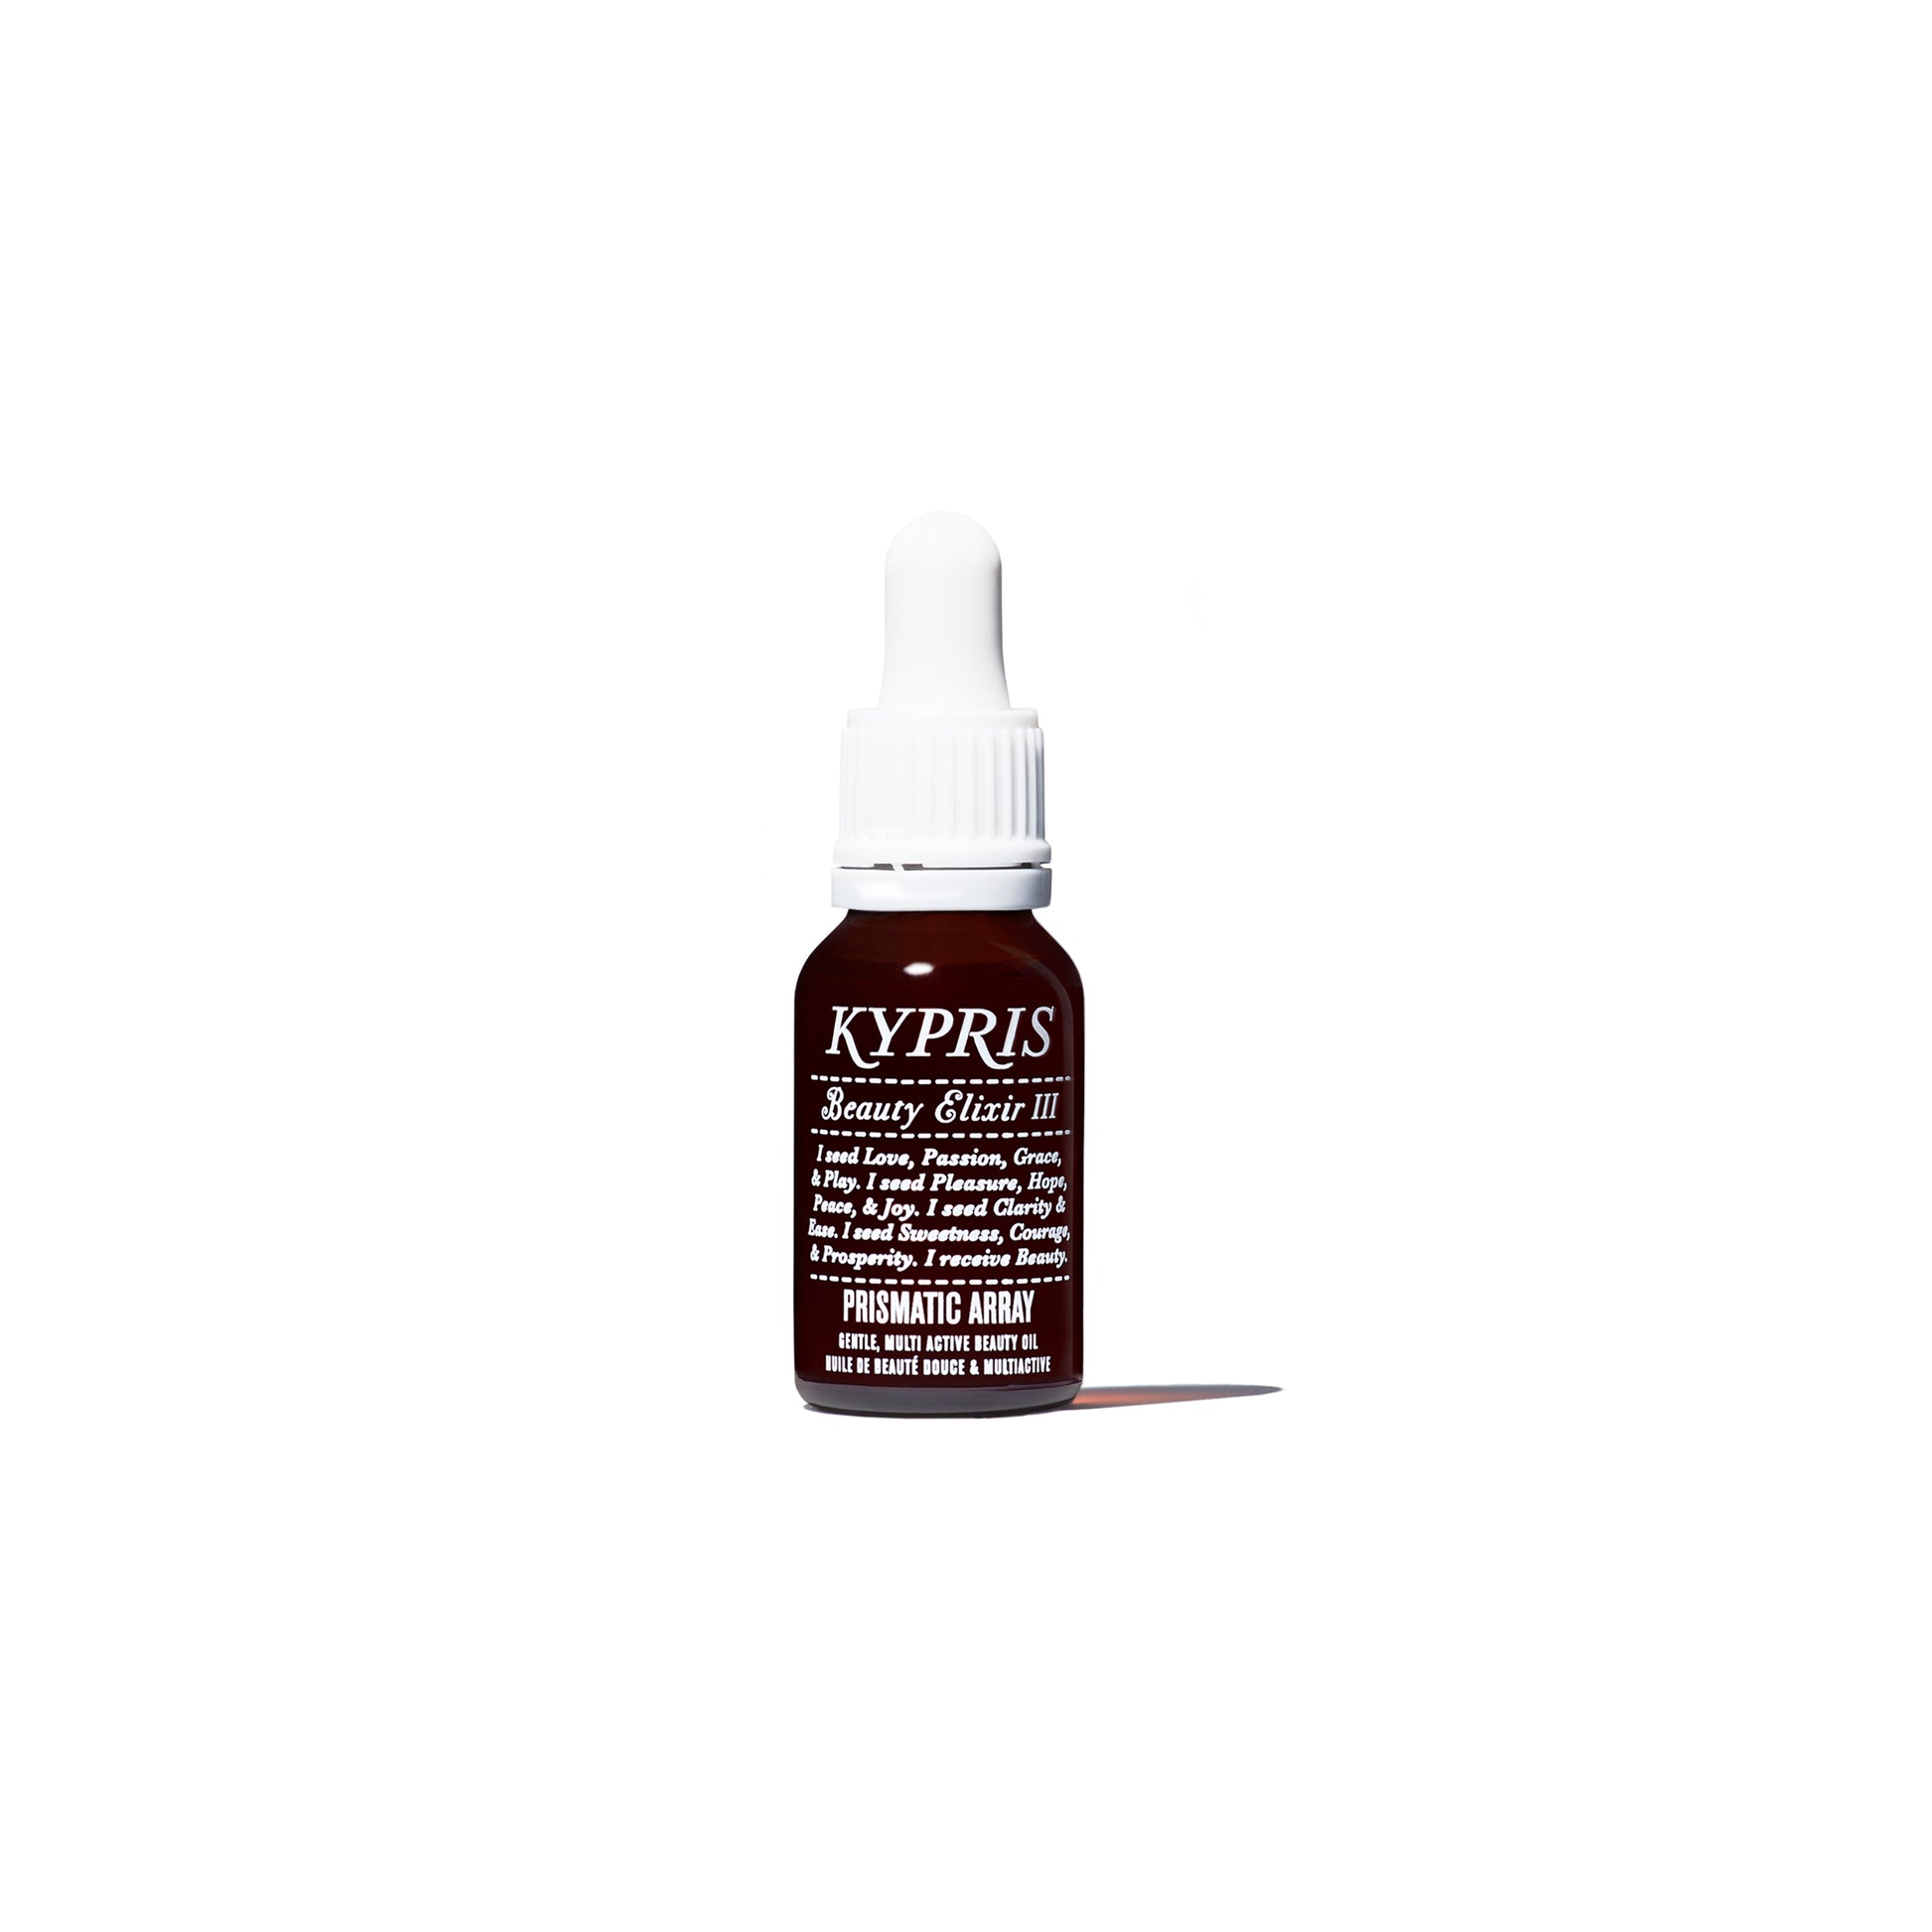 KYPRIS Beauty Elixir III Prismatic Array mini size